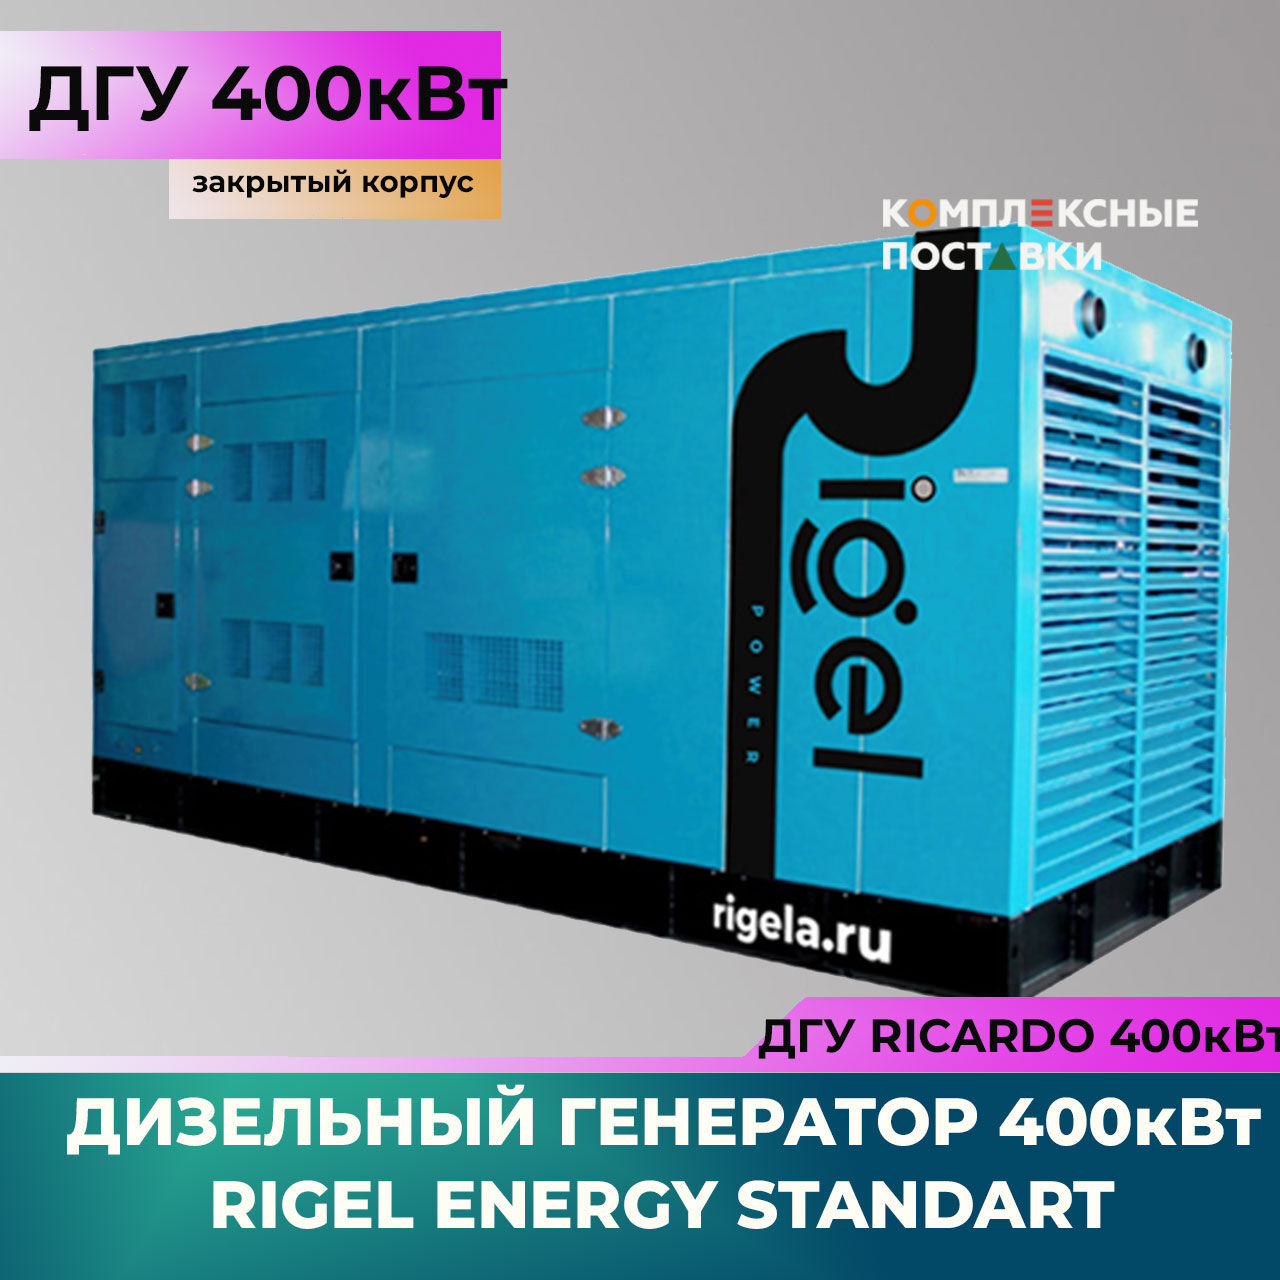 ДГУ 400кВт Ricardo R Дизель-генератор Rigel Energy Standard RES 400 (400 кВт, Ricardo R) закрытый